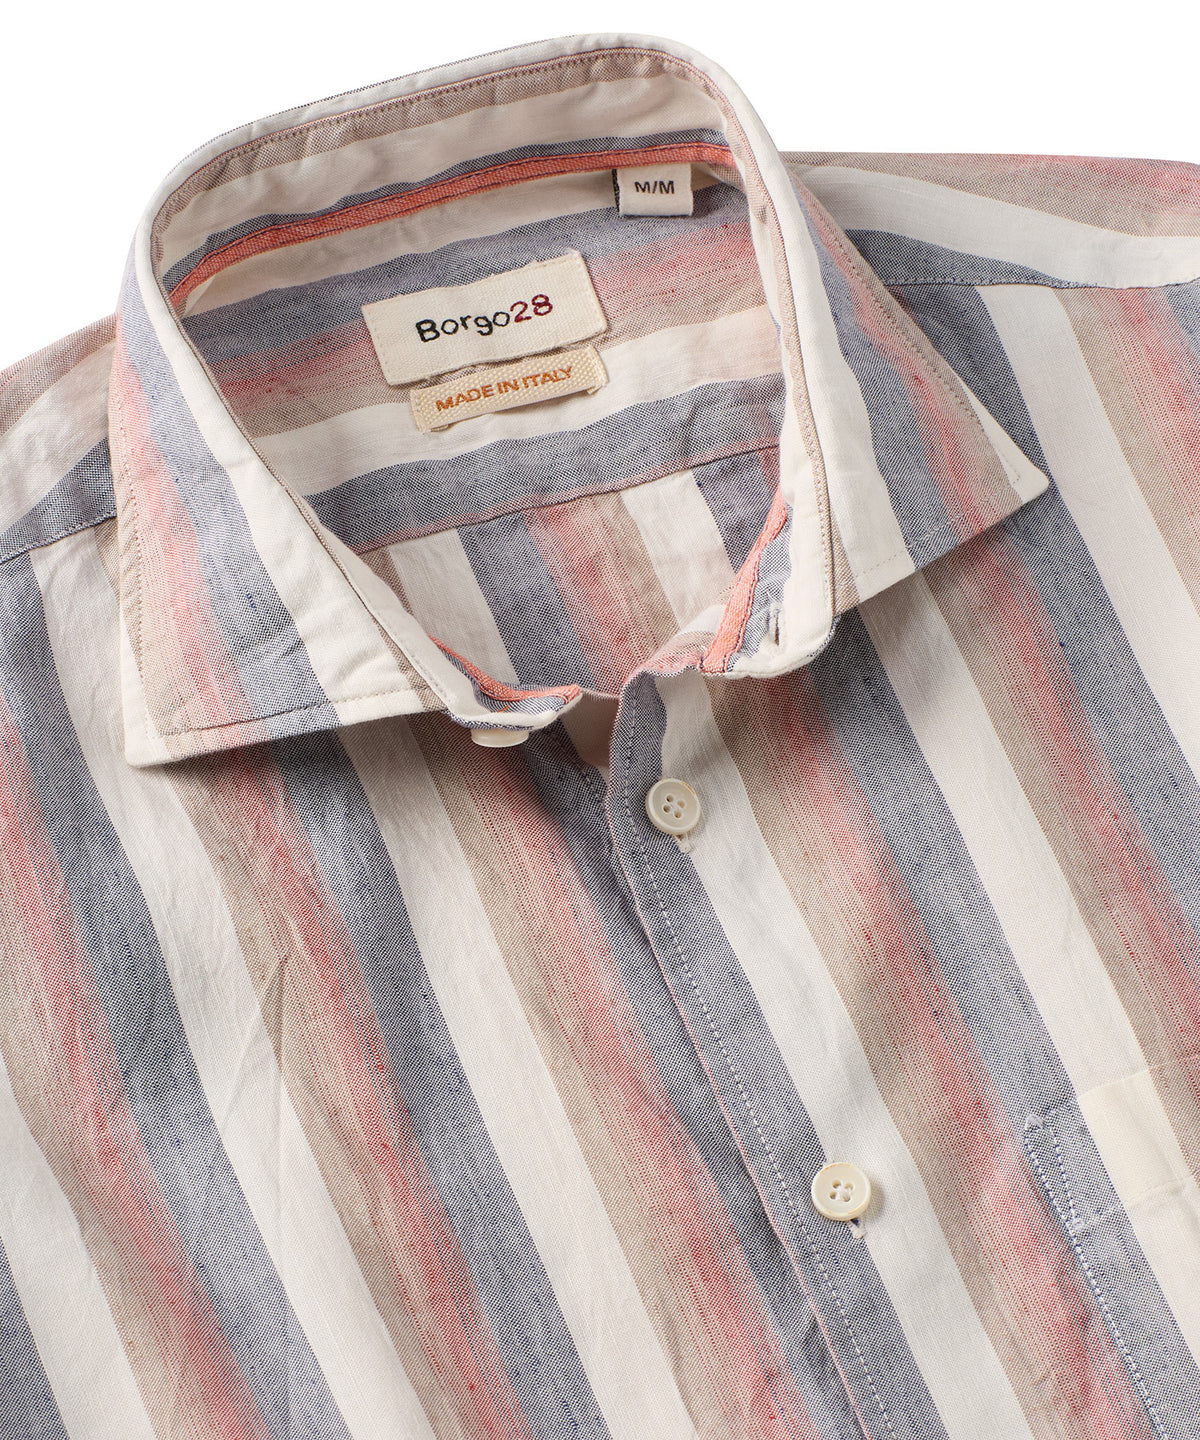 Hammock Multi-Stripe Short-Sleeve Sport Shirt